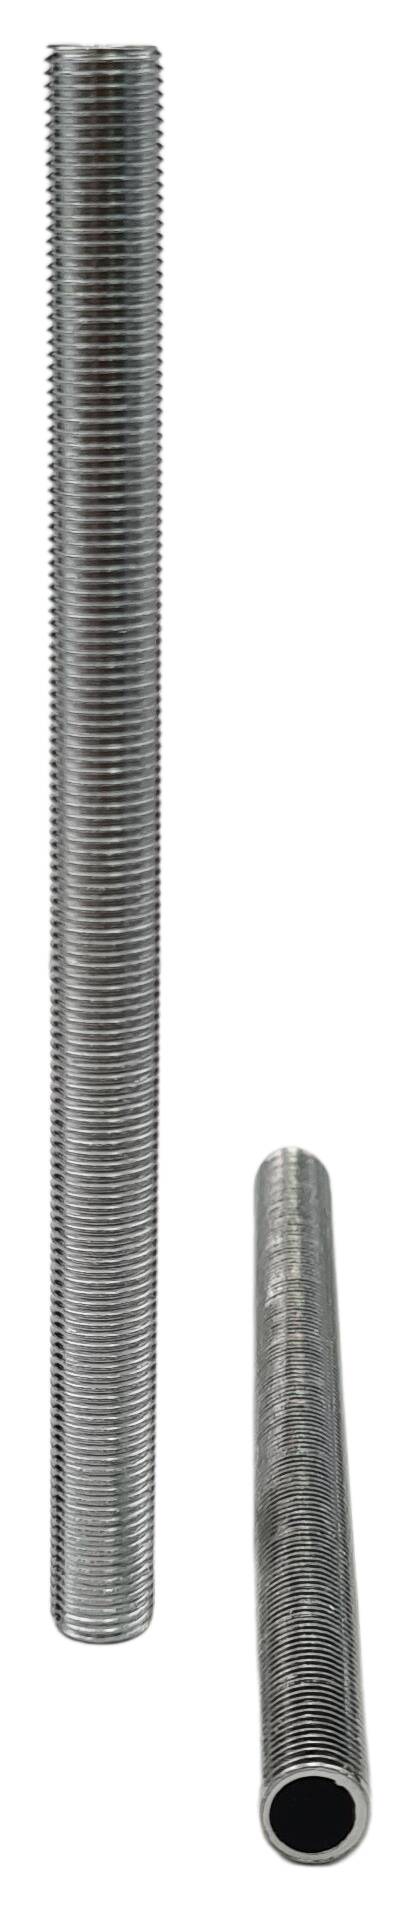 iron thread tube M10x1x145 round zinc